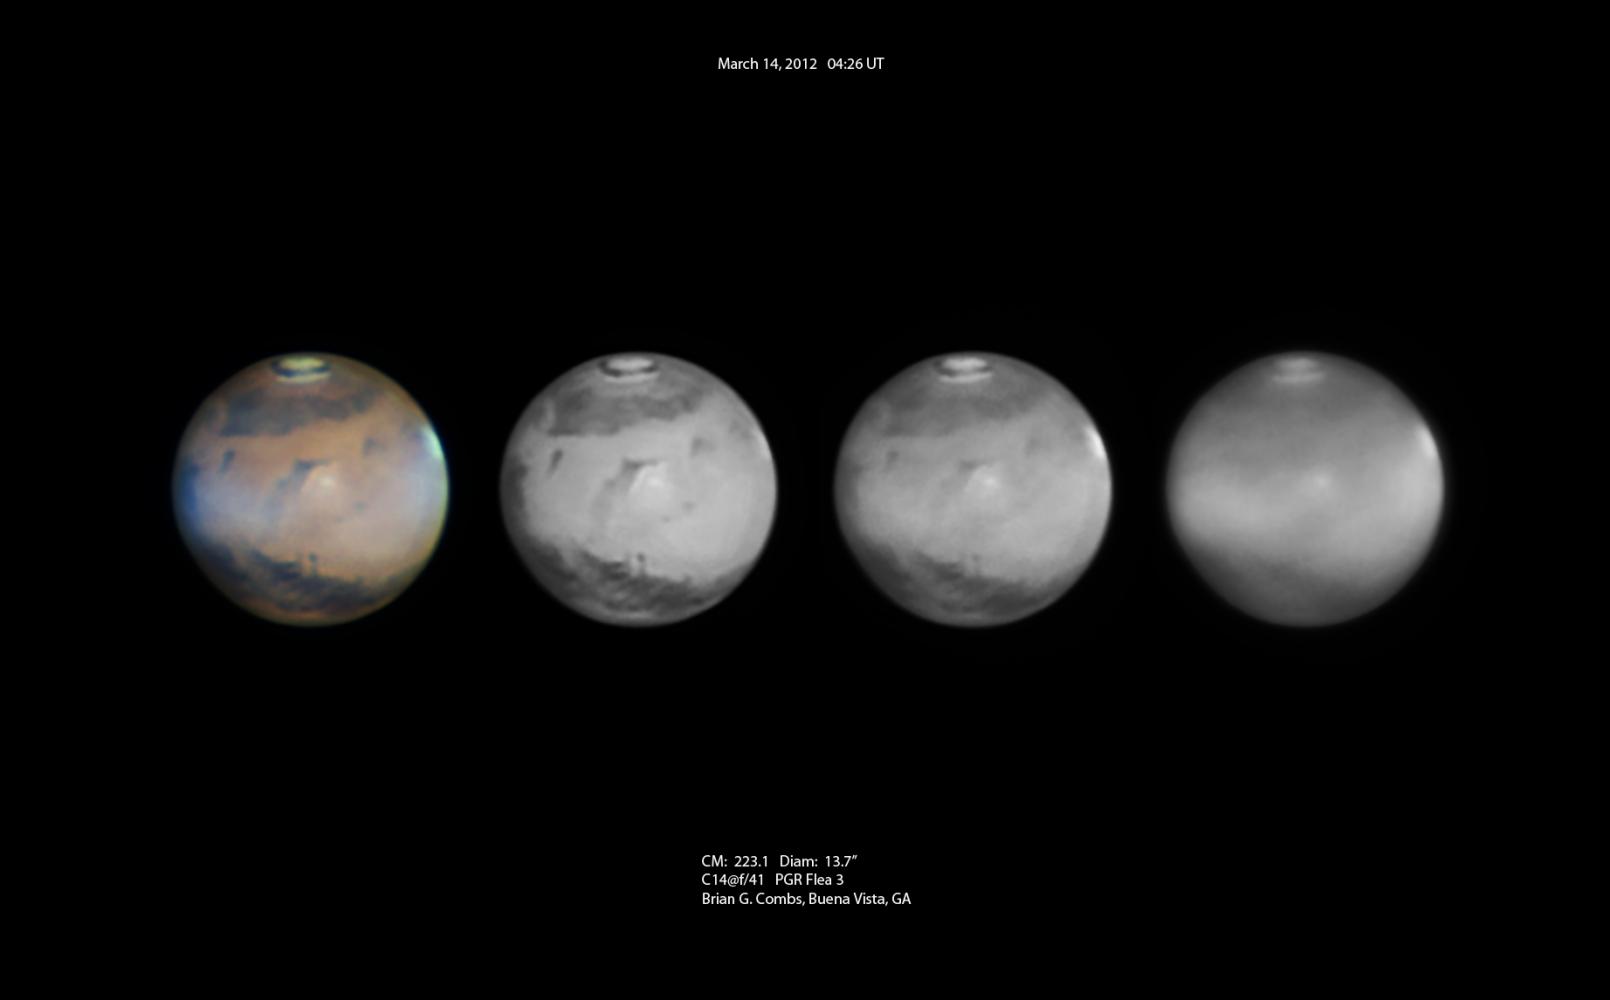 Mars - March 14, 2012